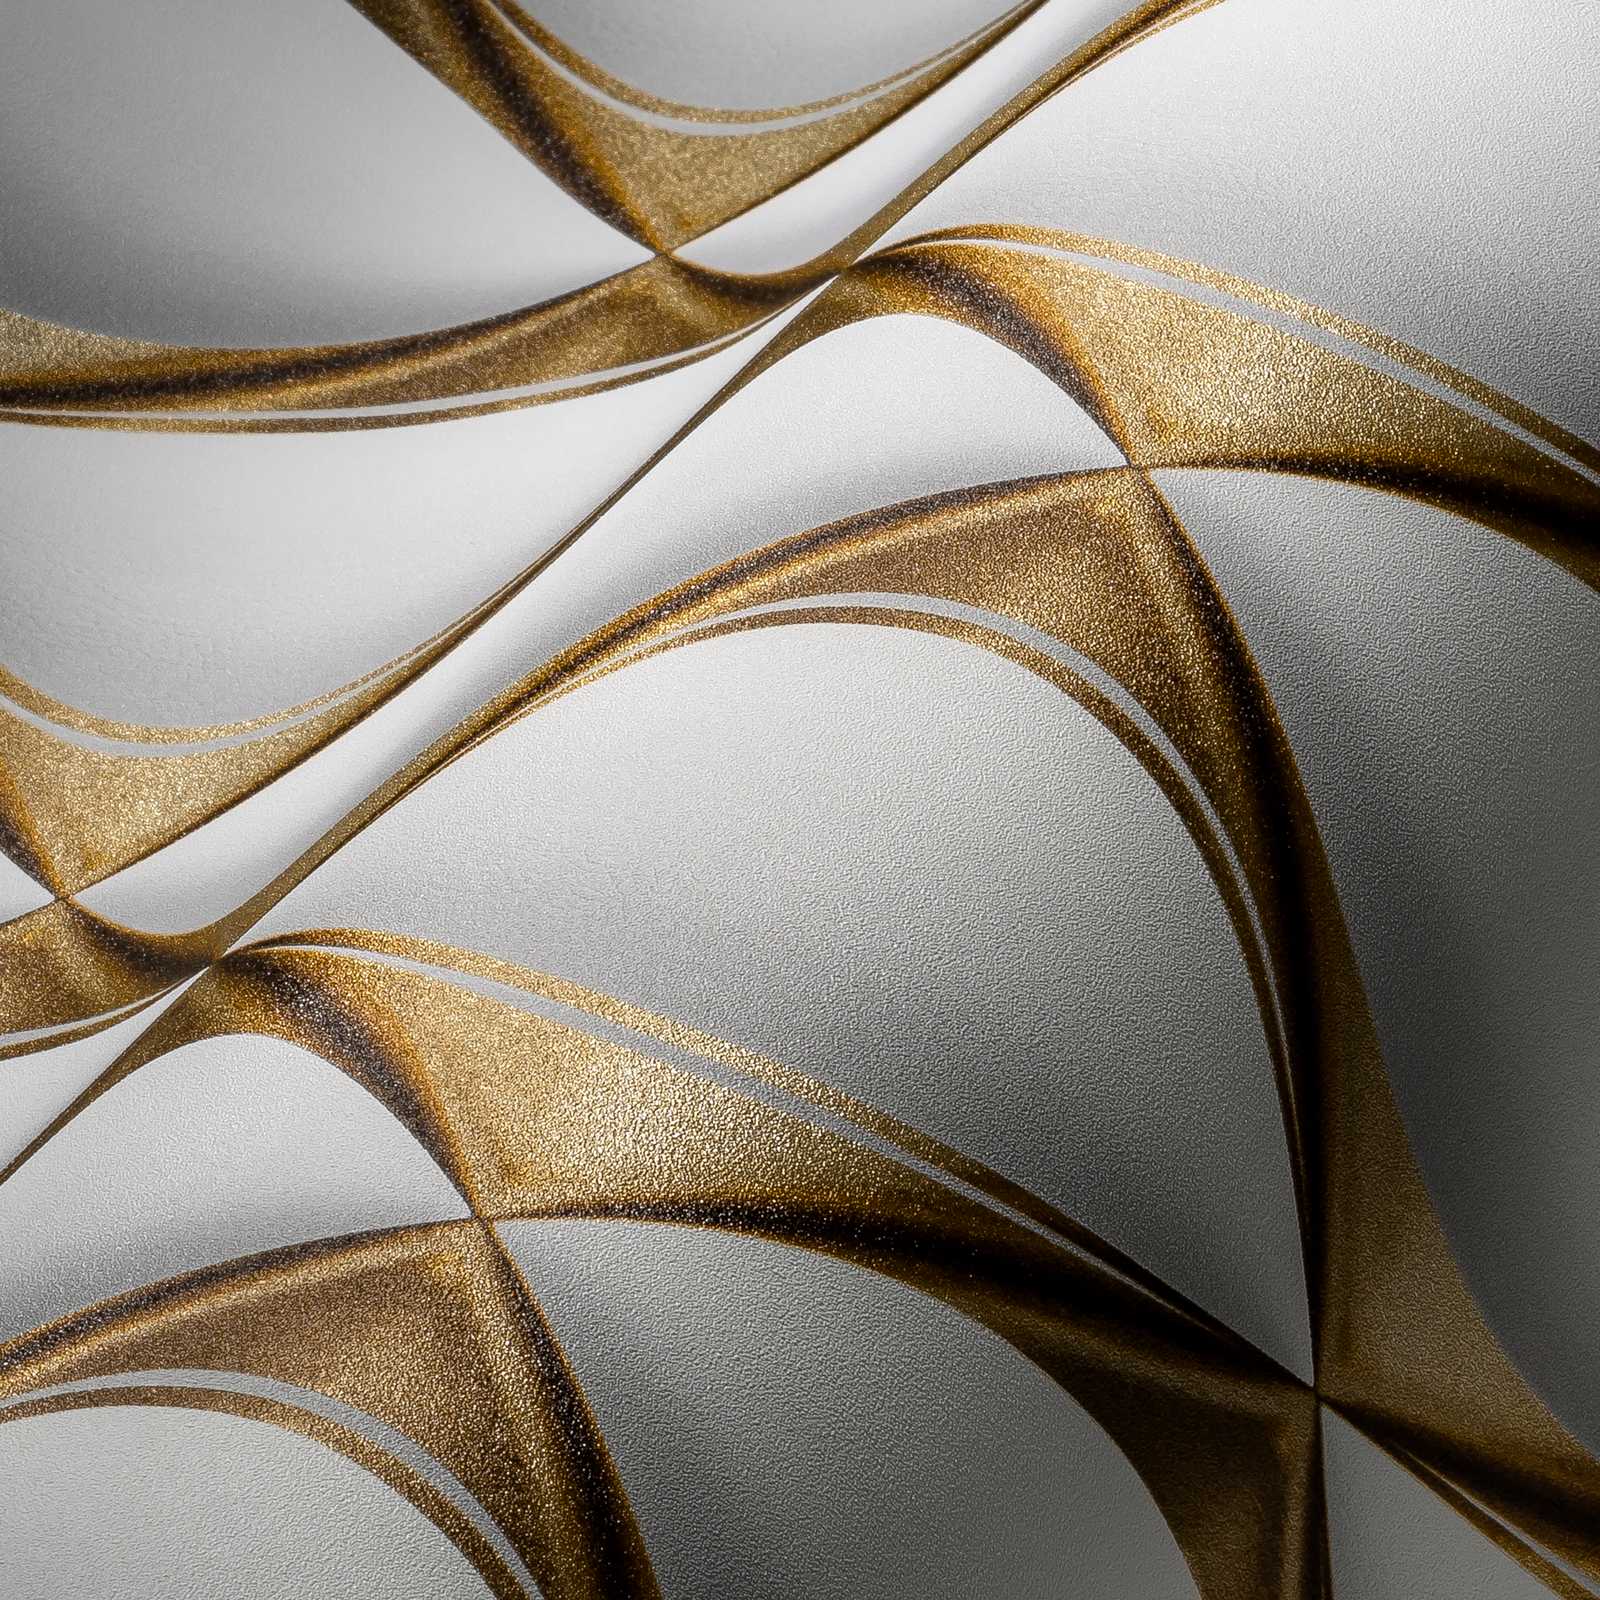             3D wallpaper golden retro pattern - white, grey, metallic
        